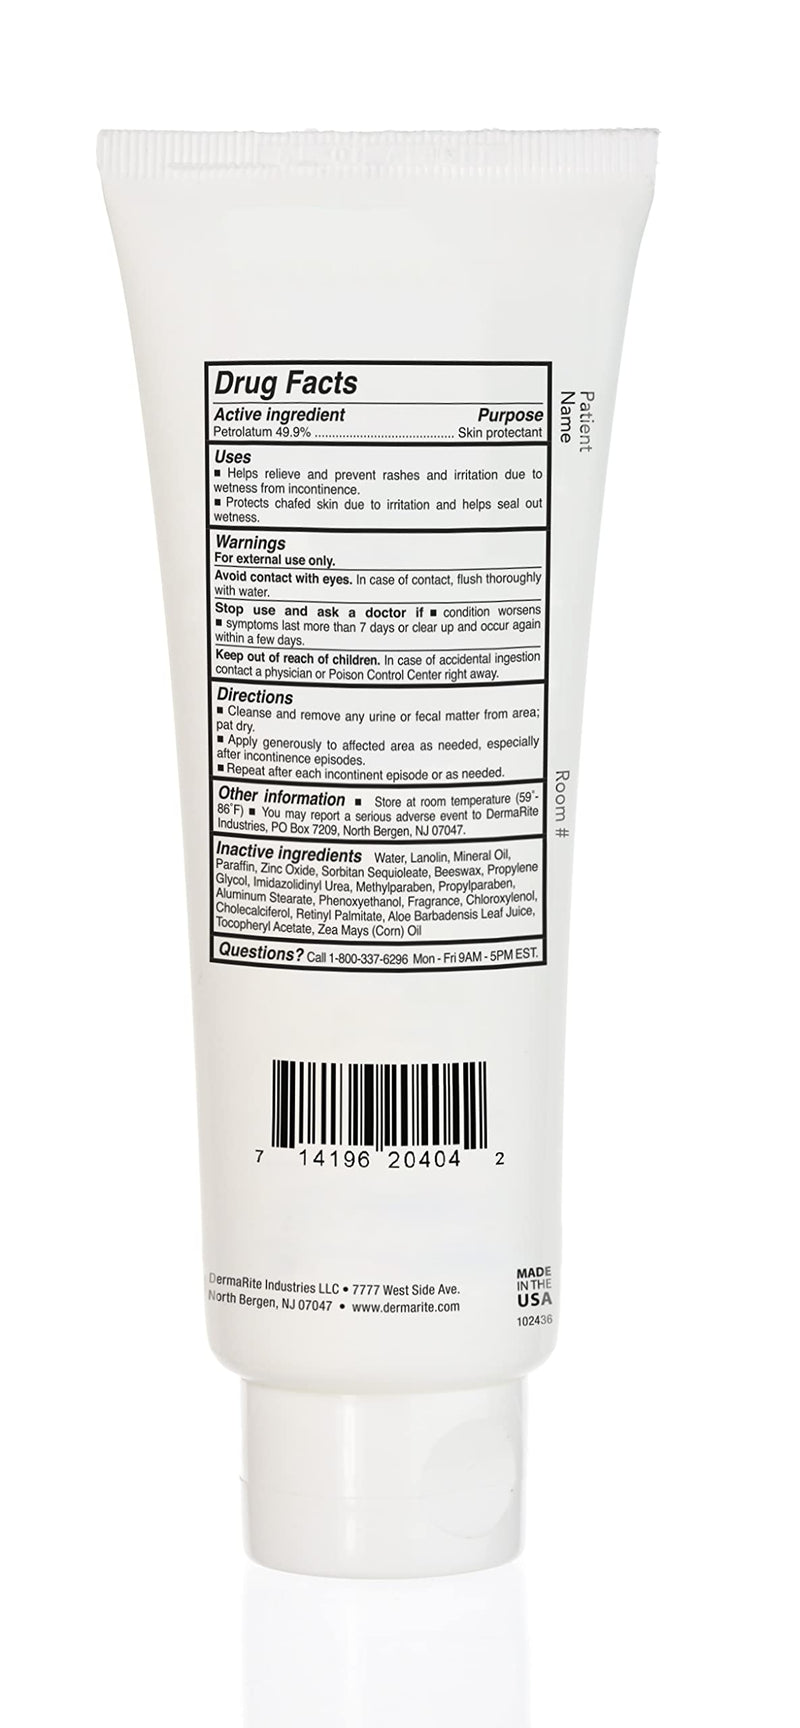 [Australia] - PeriGuard Skin Protectant Ointment - Vitamin A, D, E, Aloe Vera, Zinc, Petroleum Based Moisture Barrier - 2 Tubes, 3.5 oz Each 3.52 Ounce (Pack of 2) 